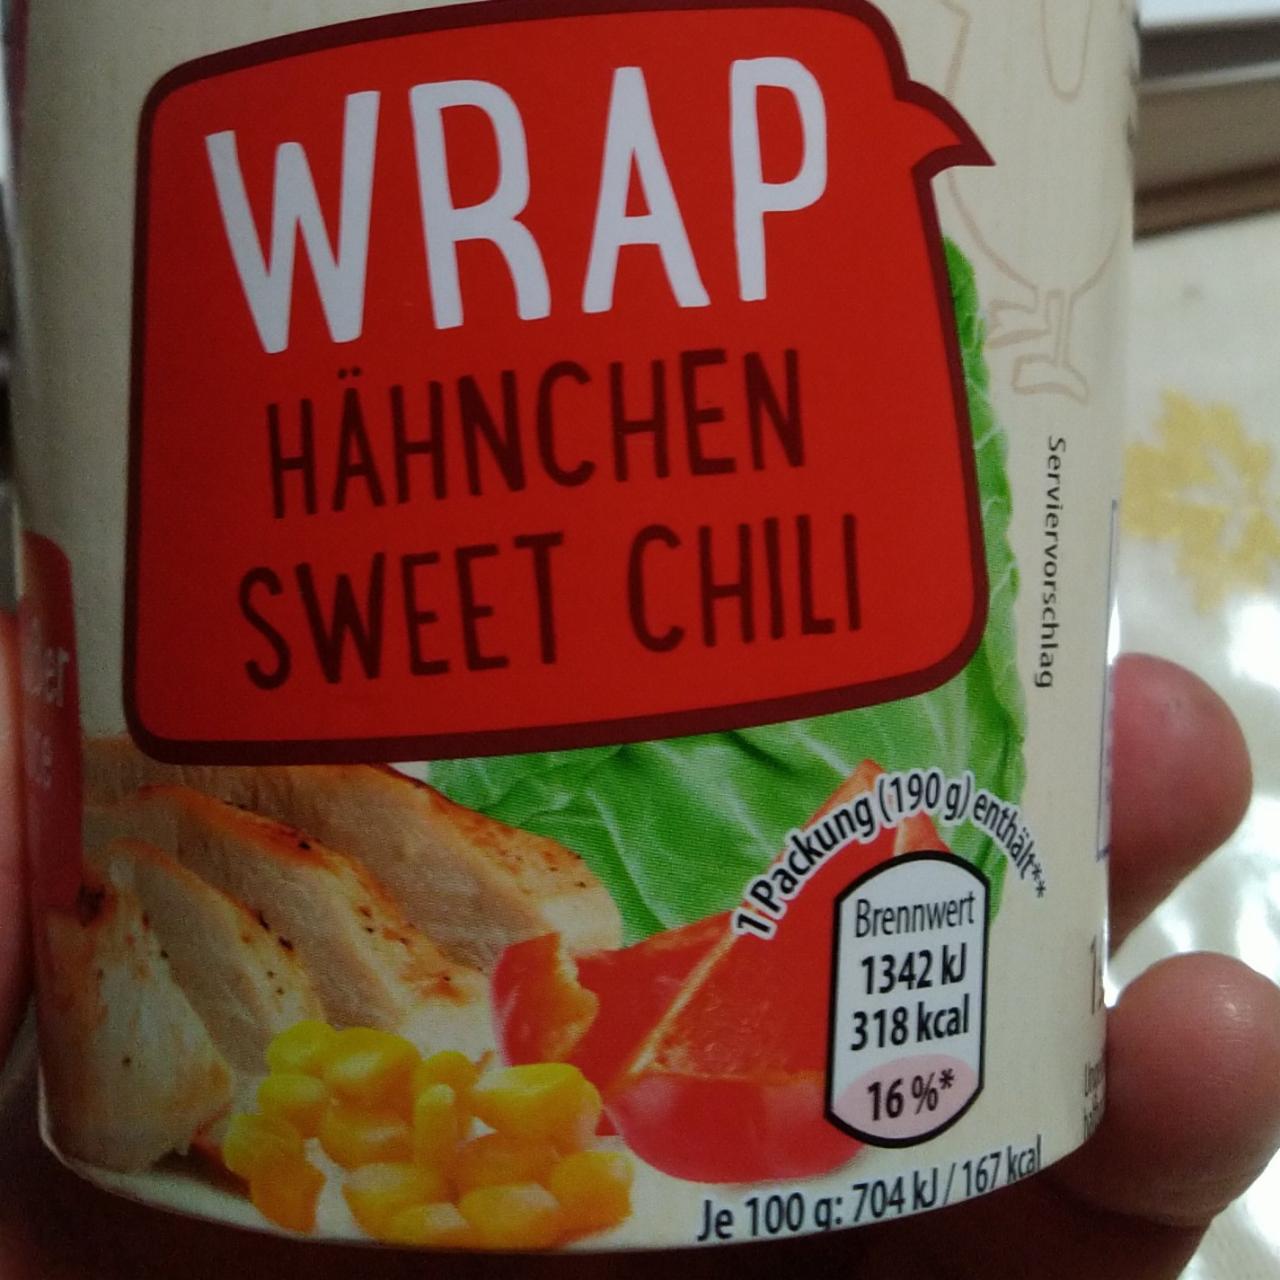 Fotografie - Wrap Hähnchen Sweet chili